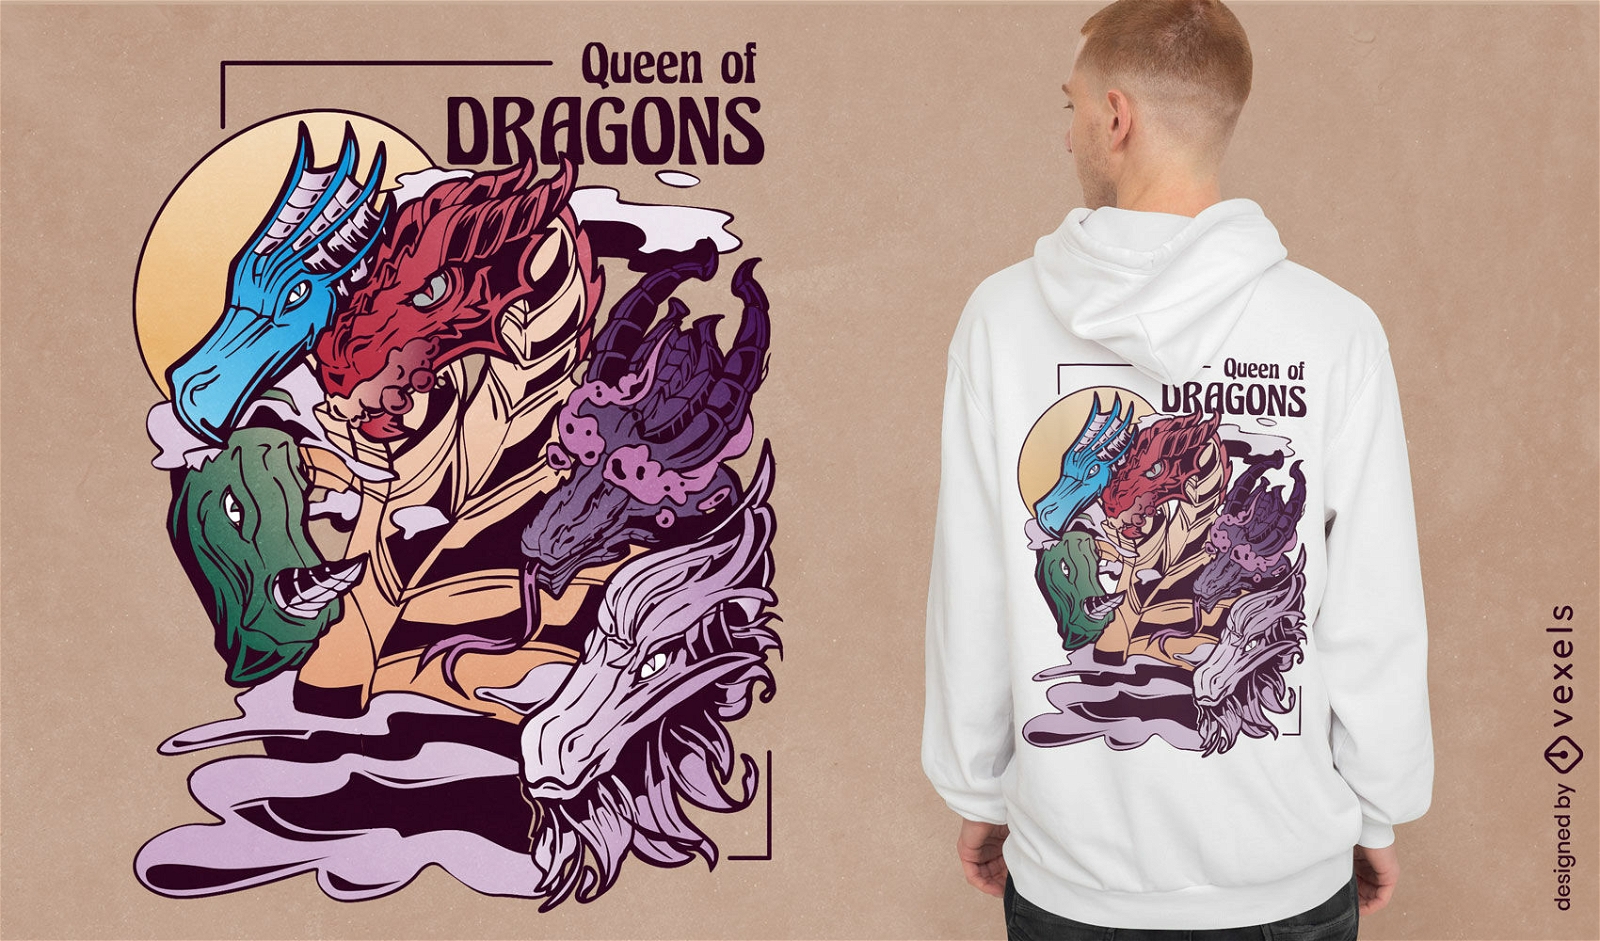 Diseño de camiseta de criatura dragón de cinco cabezas.